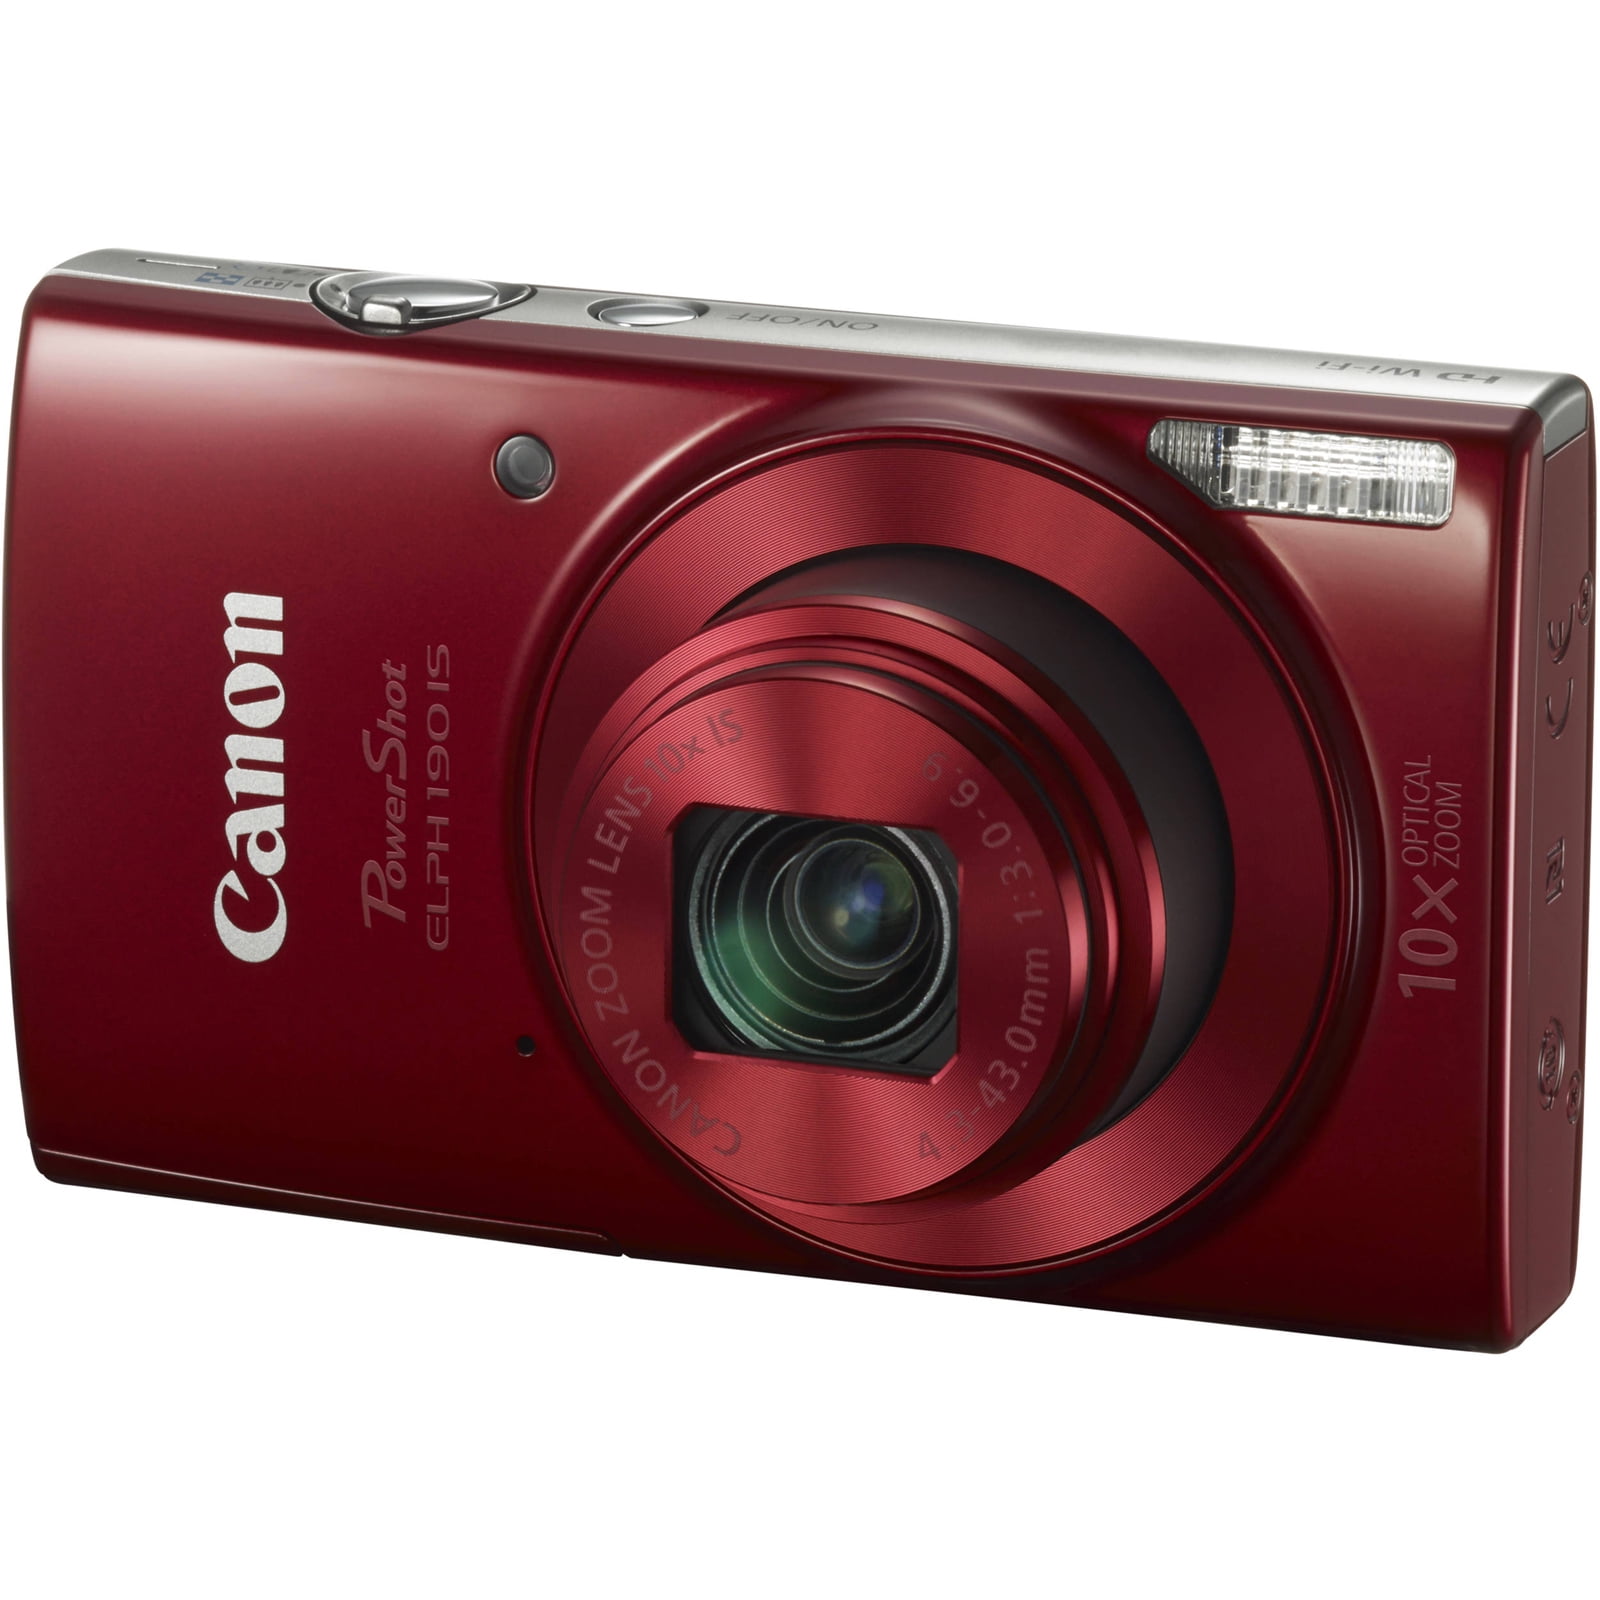 canon powshot elph 190 es cámara digital ( rojo ) Panama